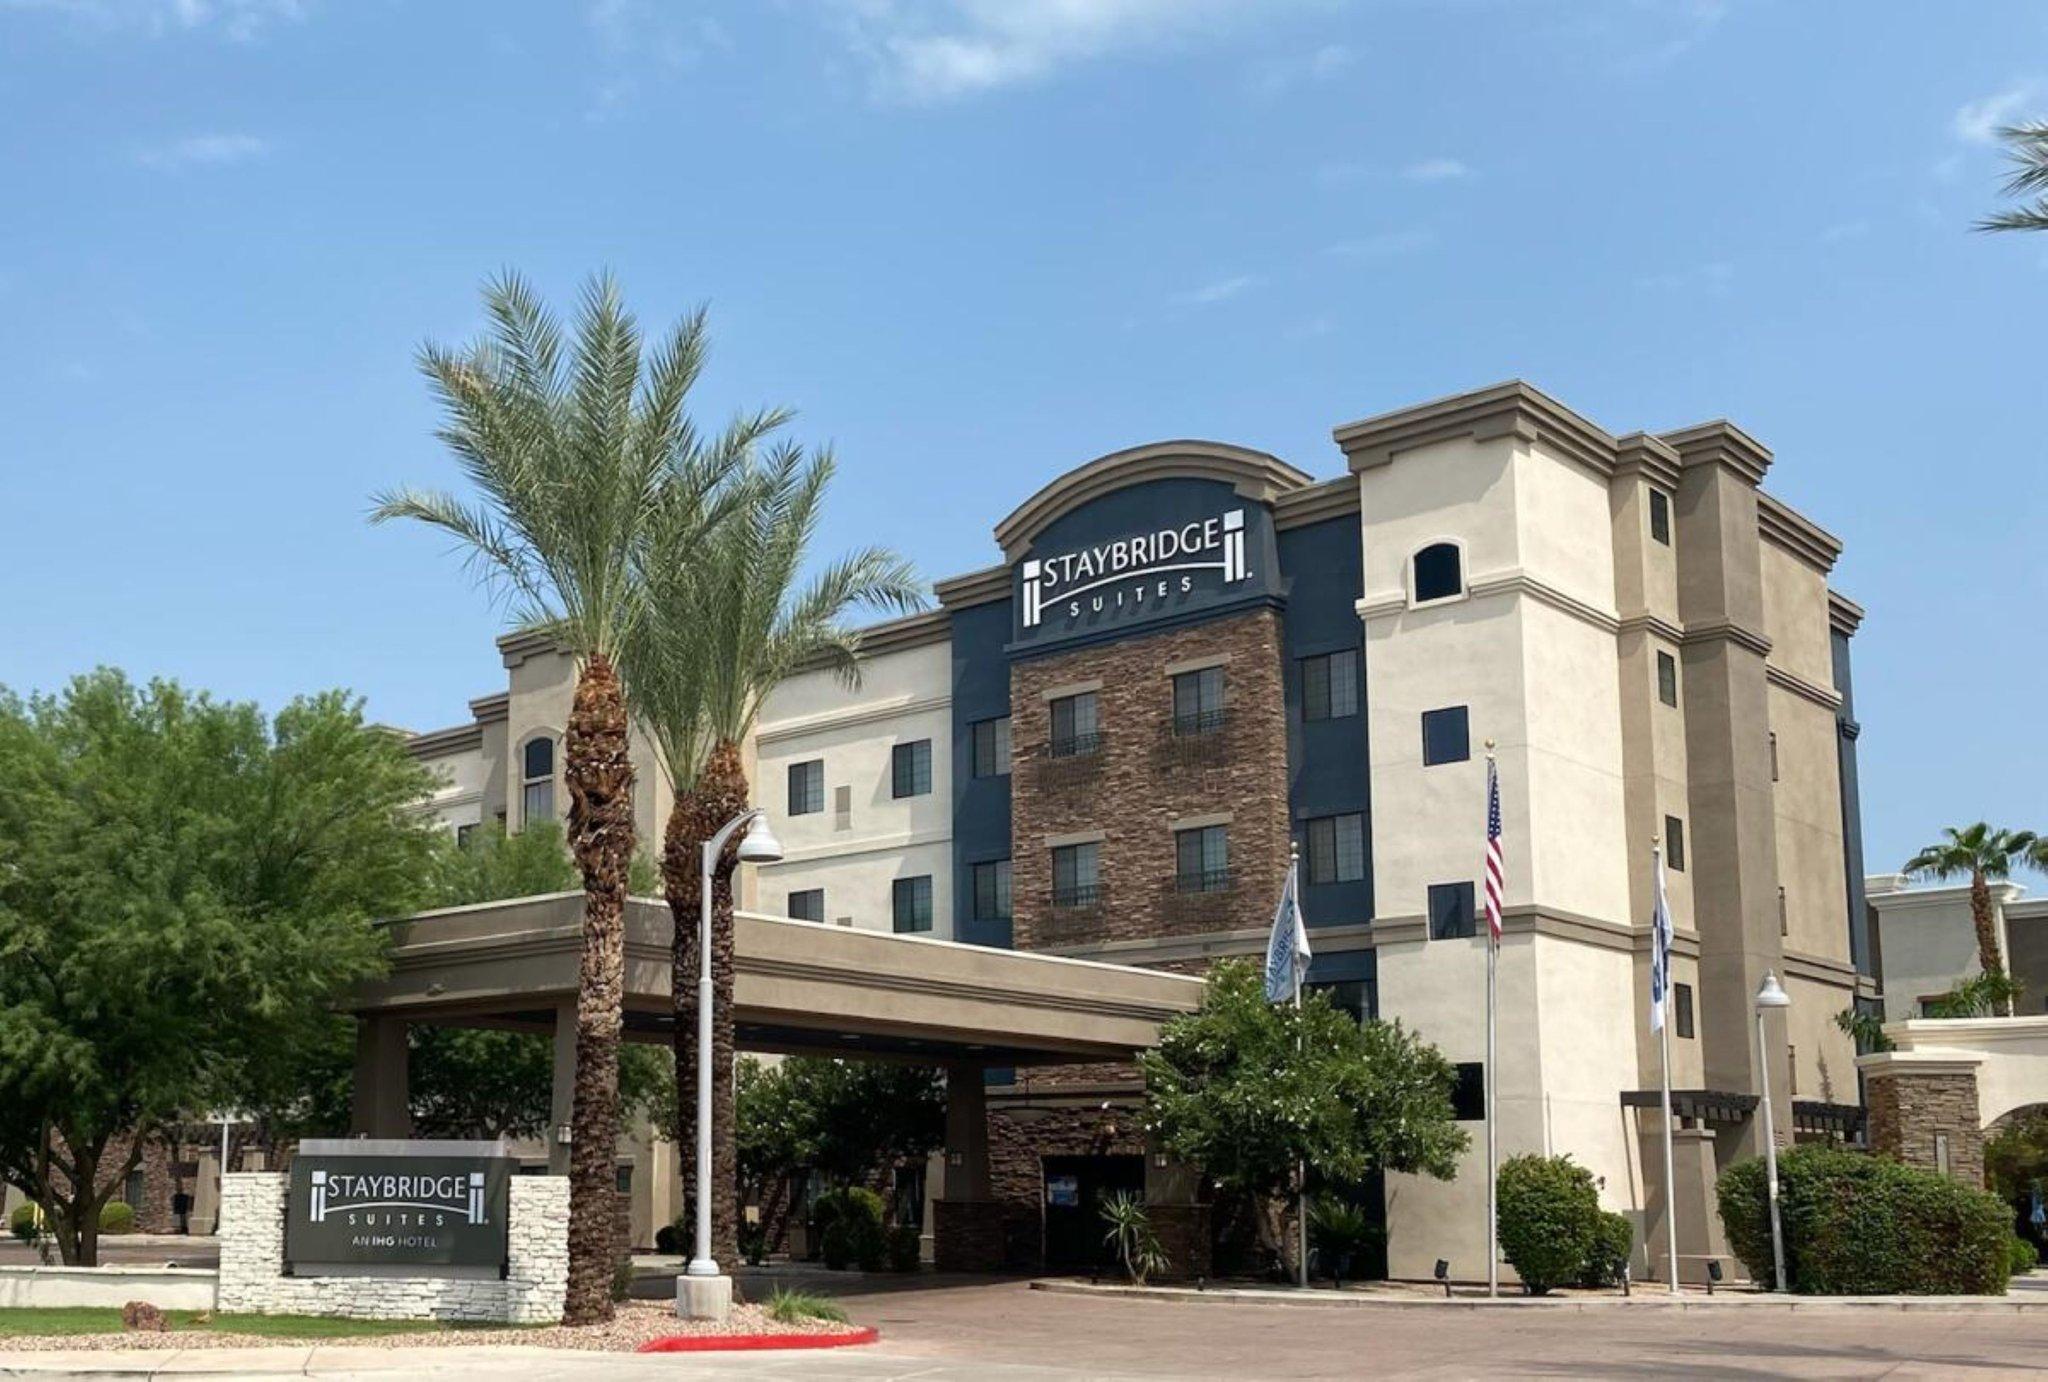 Staybridge Suites Phoenix-Glendale in Glendale, AZ